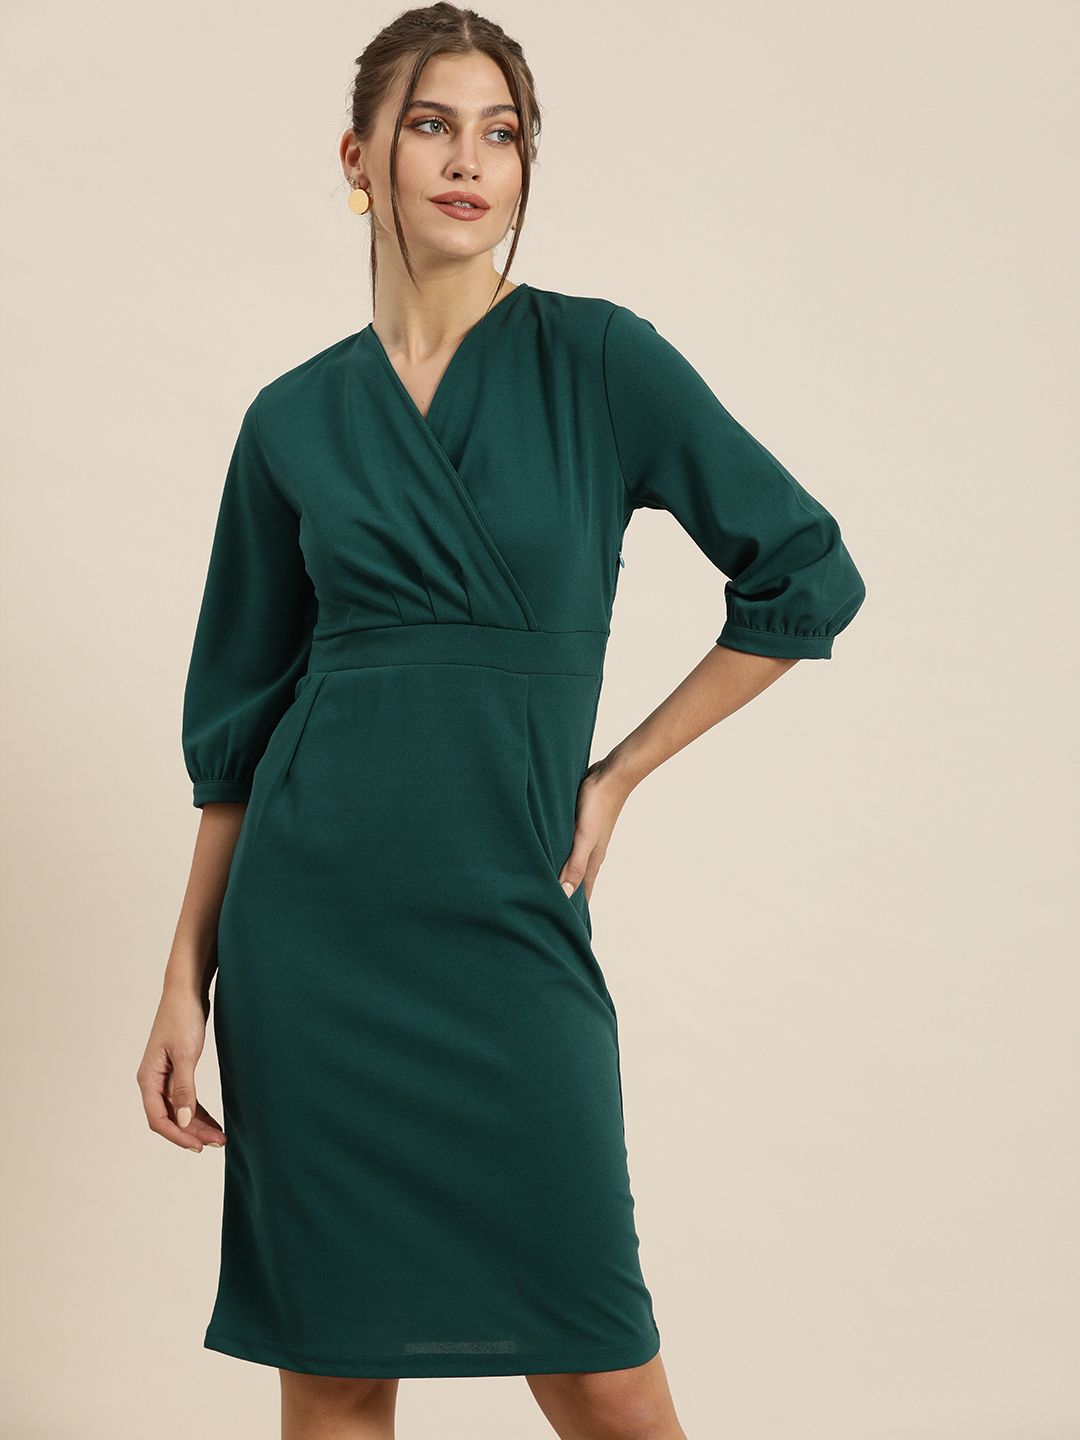 Moda Rapido Green Wrap Dress - Price